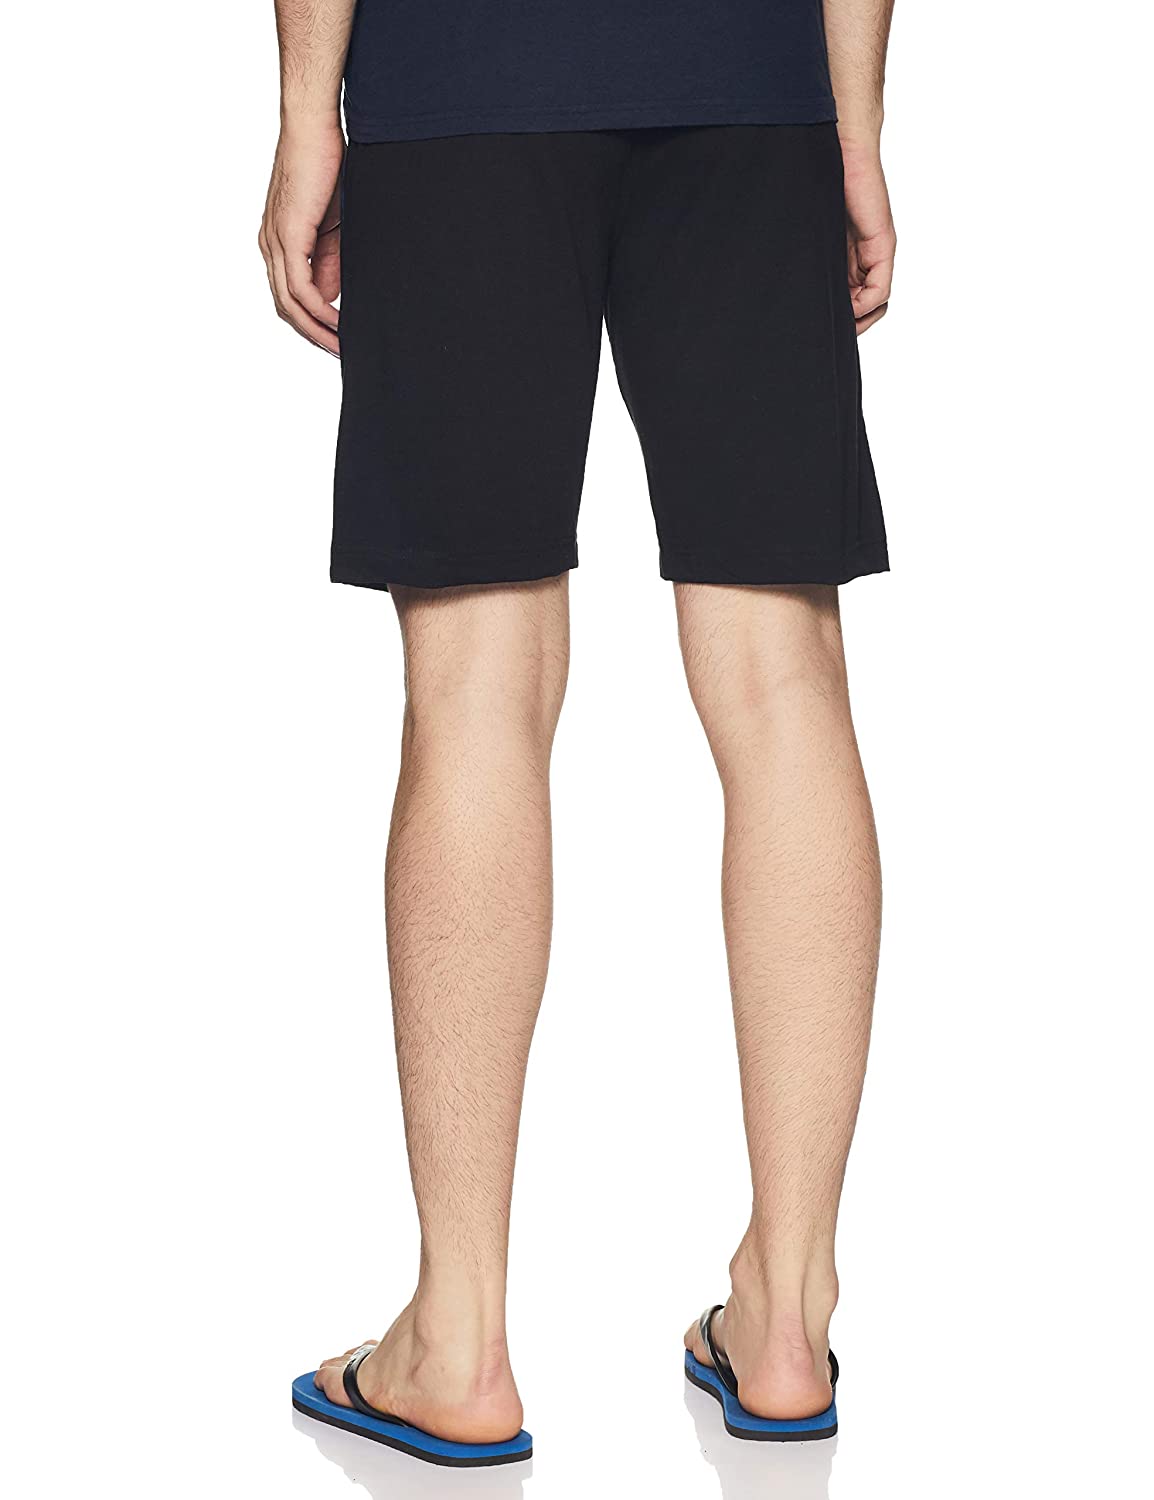 US Polo Assn. Men's Lounge and Sleepwear Shorts Black - Stilento